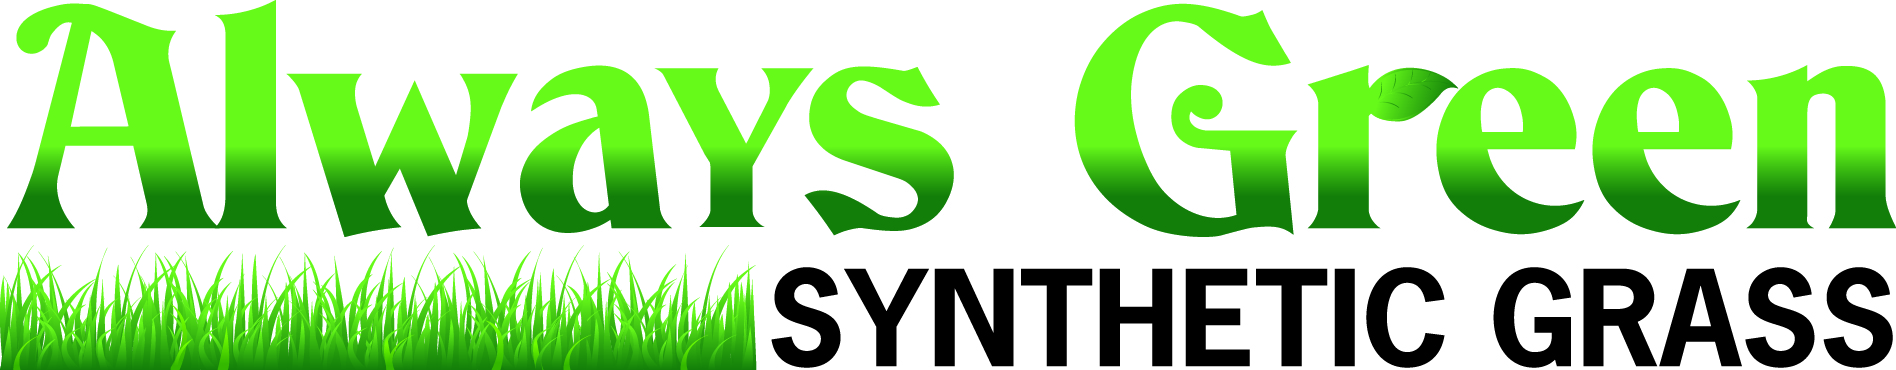 Always Green Synthetic Grass, LLC Logo